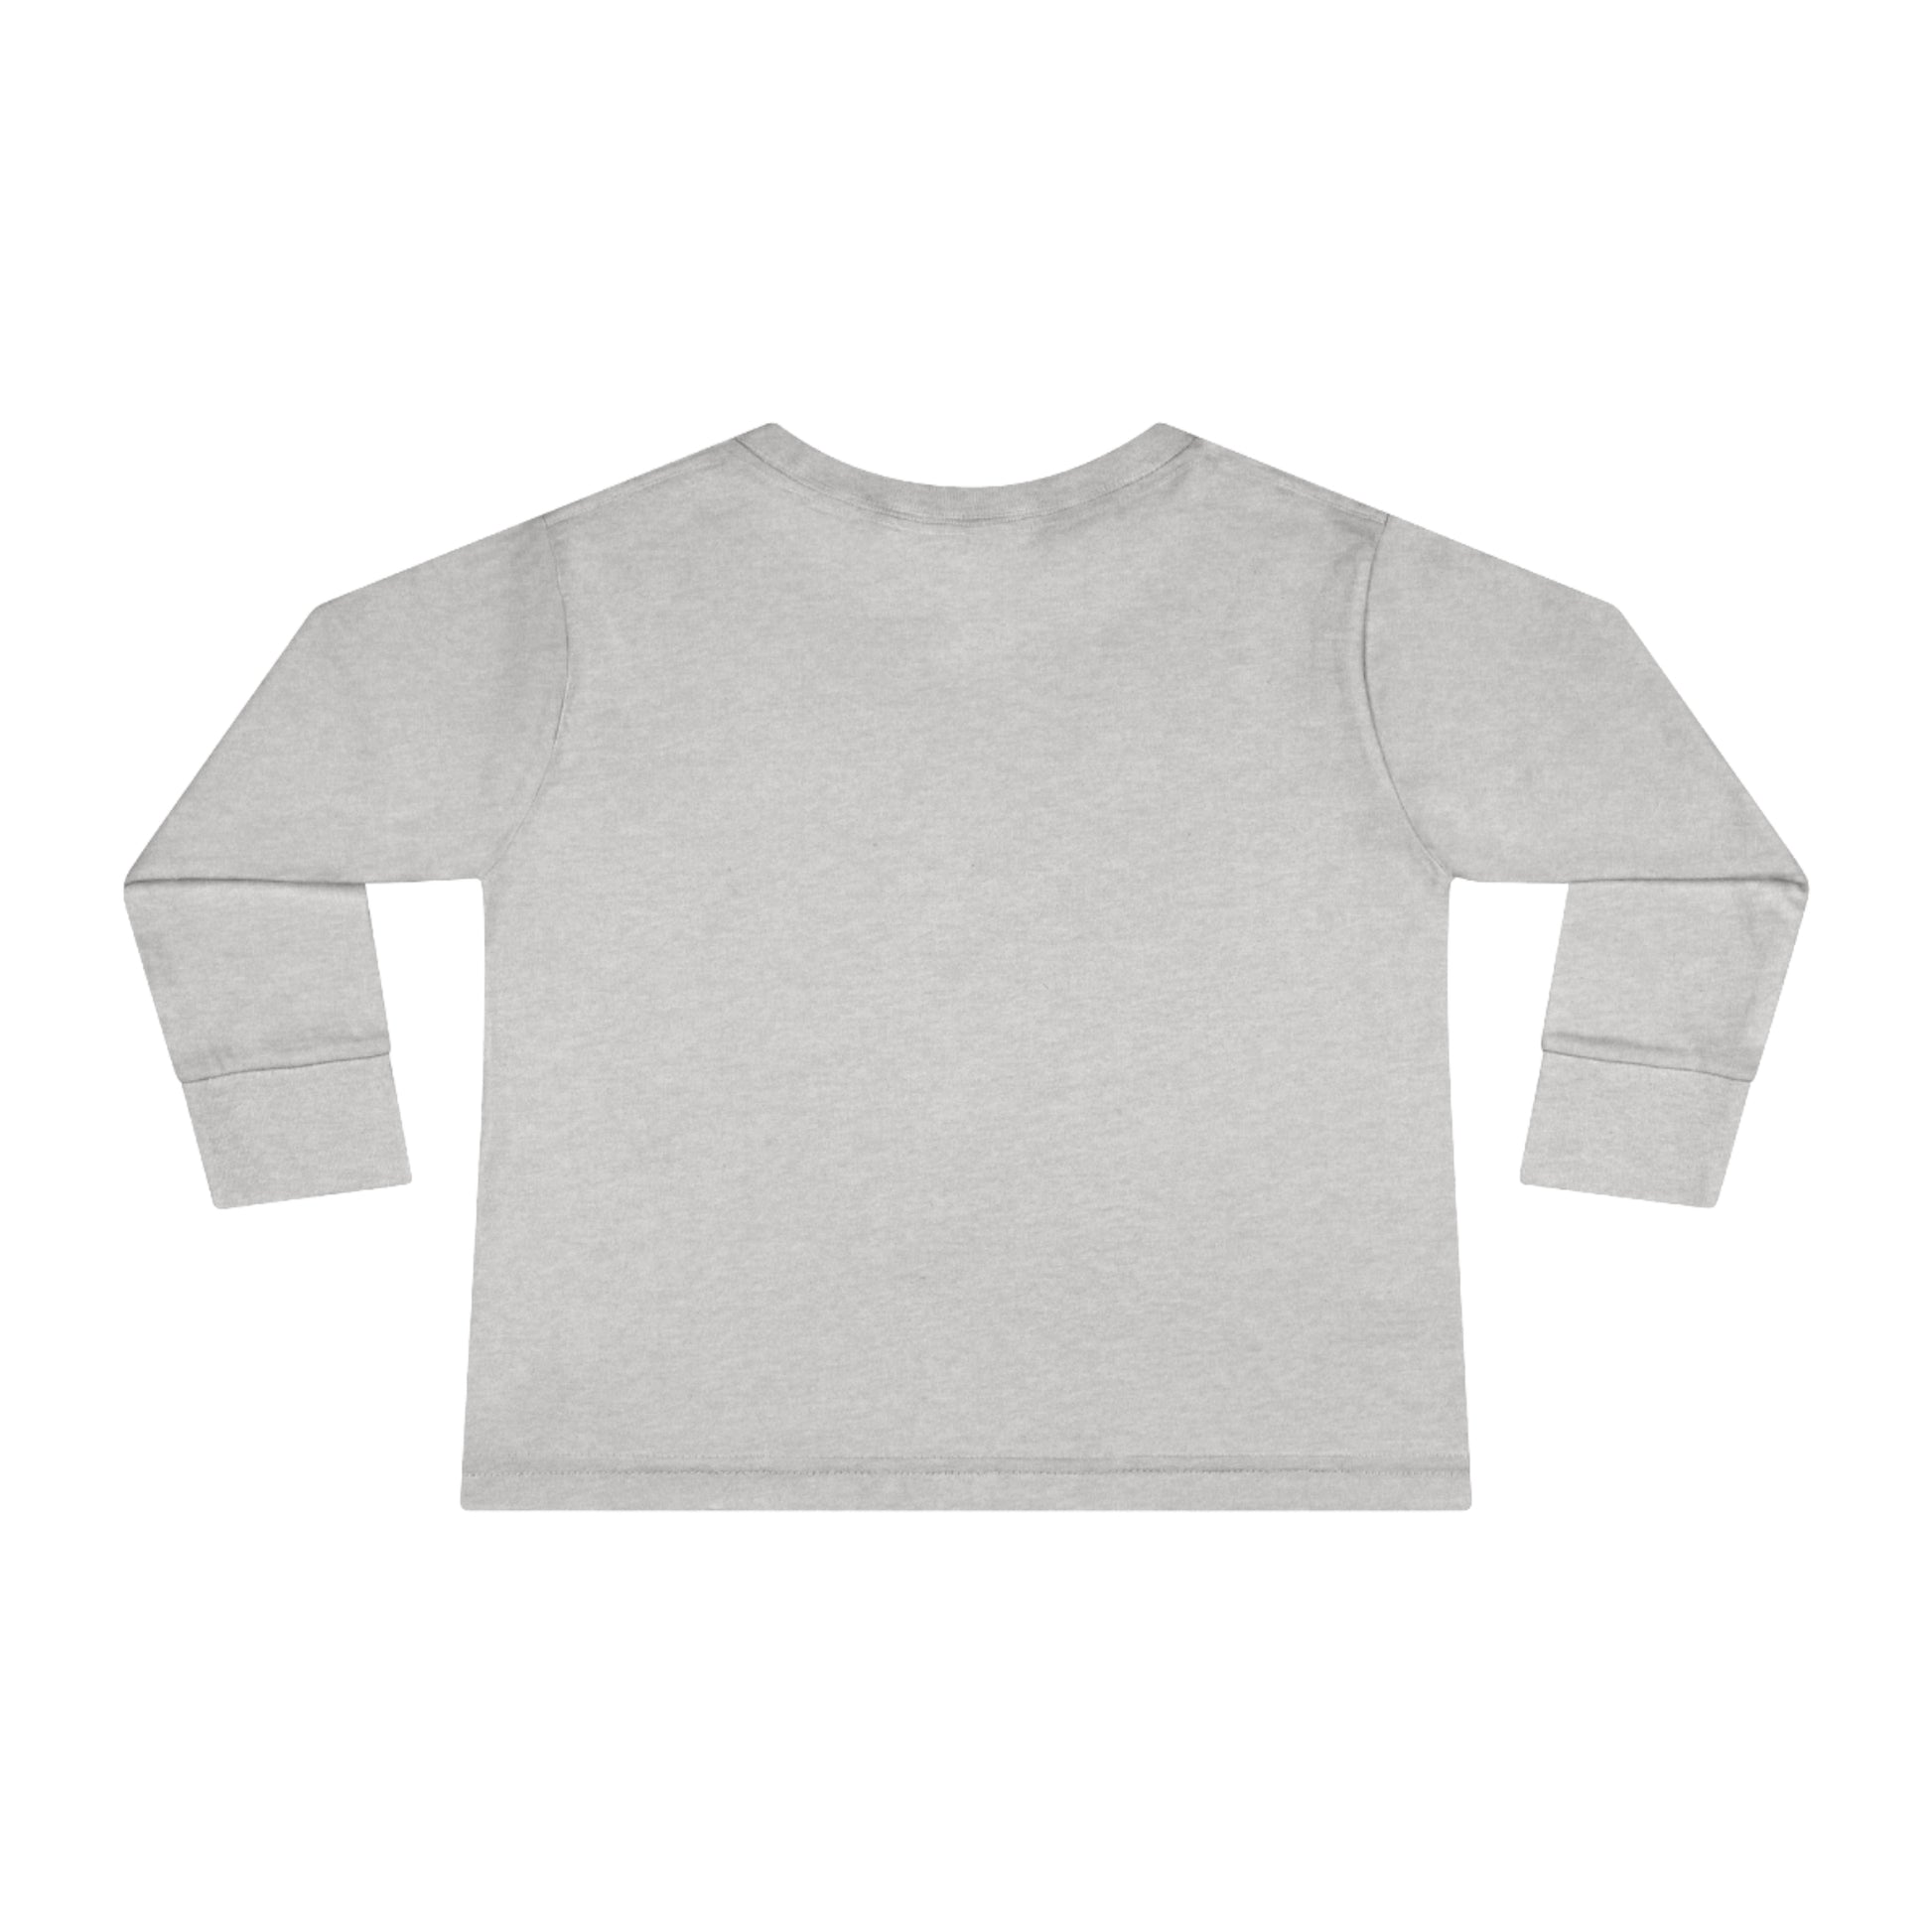 God Is For Me Toddler Christian Sweatshirt Printify